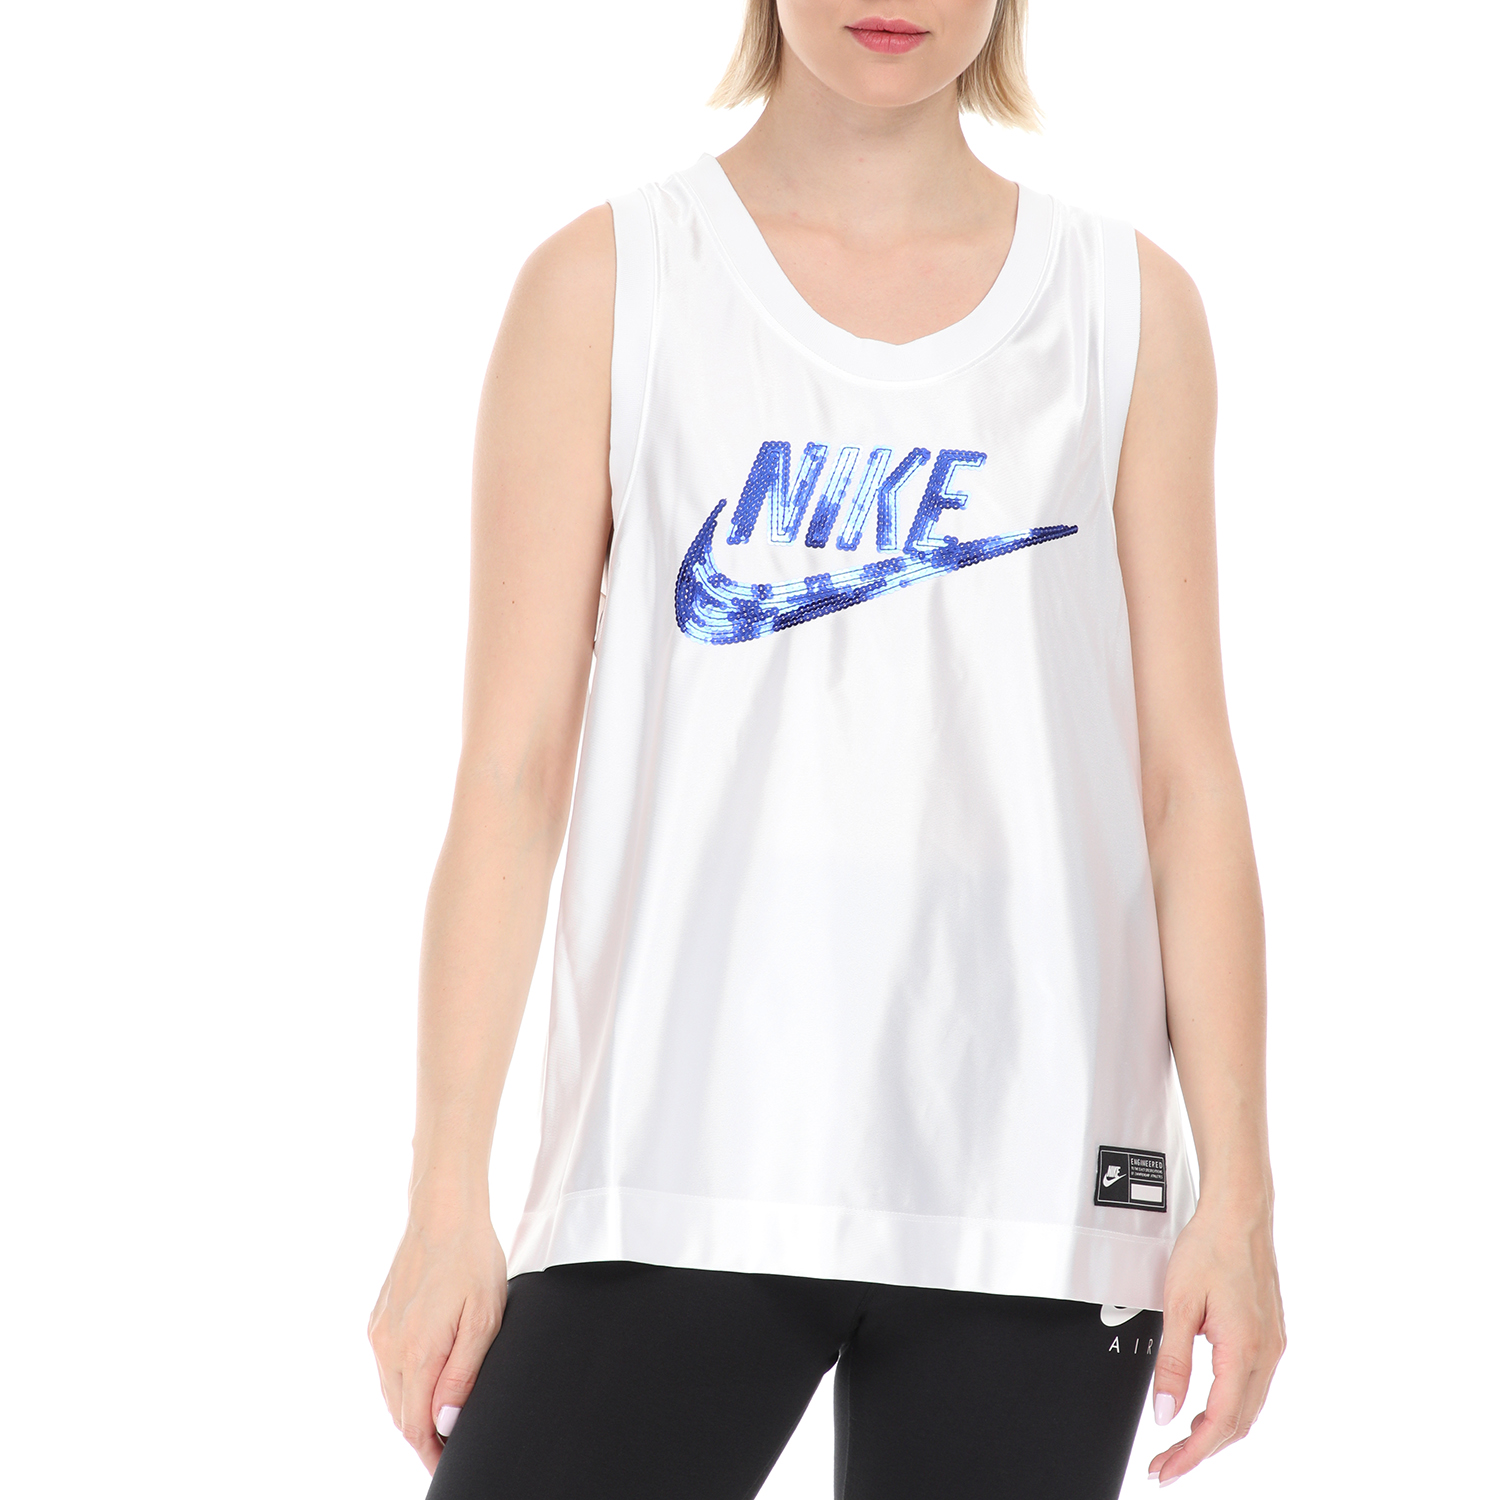 NIKE - Γυναικεία αθλητική φανέλα NIKE NSW JERSEY GLM DNK λευκή μπλε Γυναικεία/Ρούχα/Αθλητικά/T-shirt-Τοπ